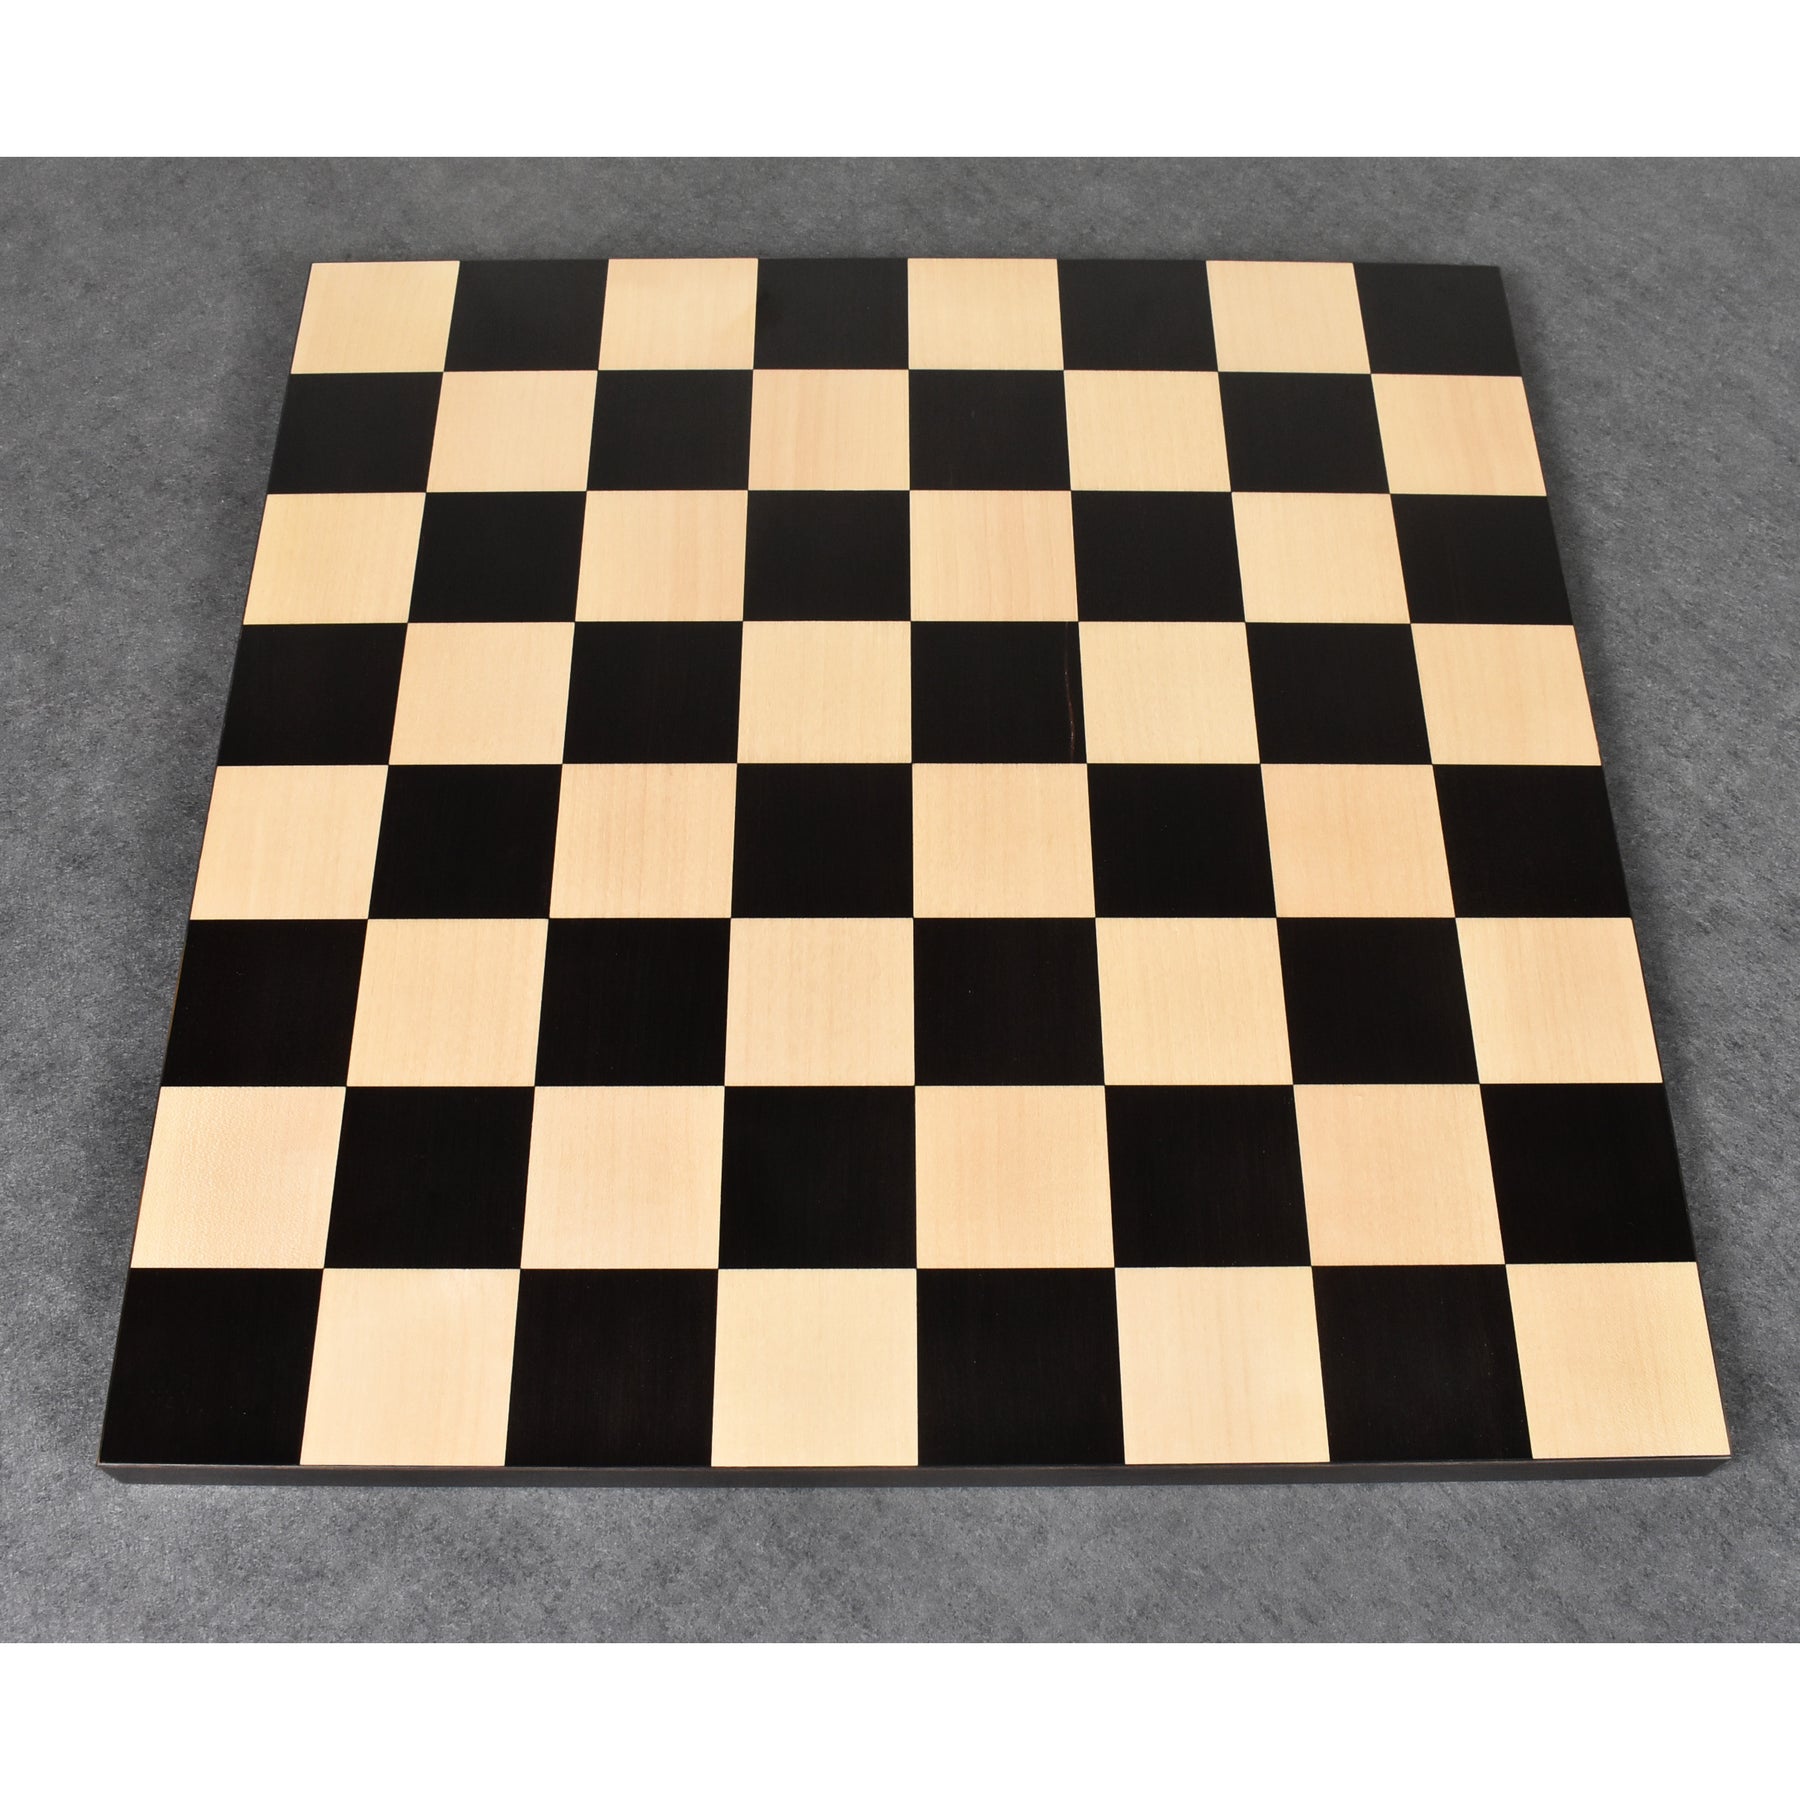 50mm Borderless Chess Board Golden Rosewood(Sheesham) & Maple BLACKFRIDAY  SALE